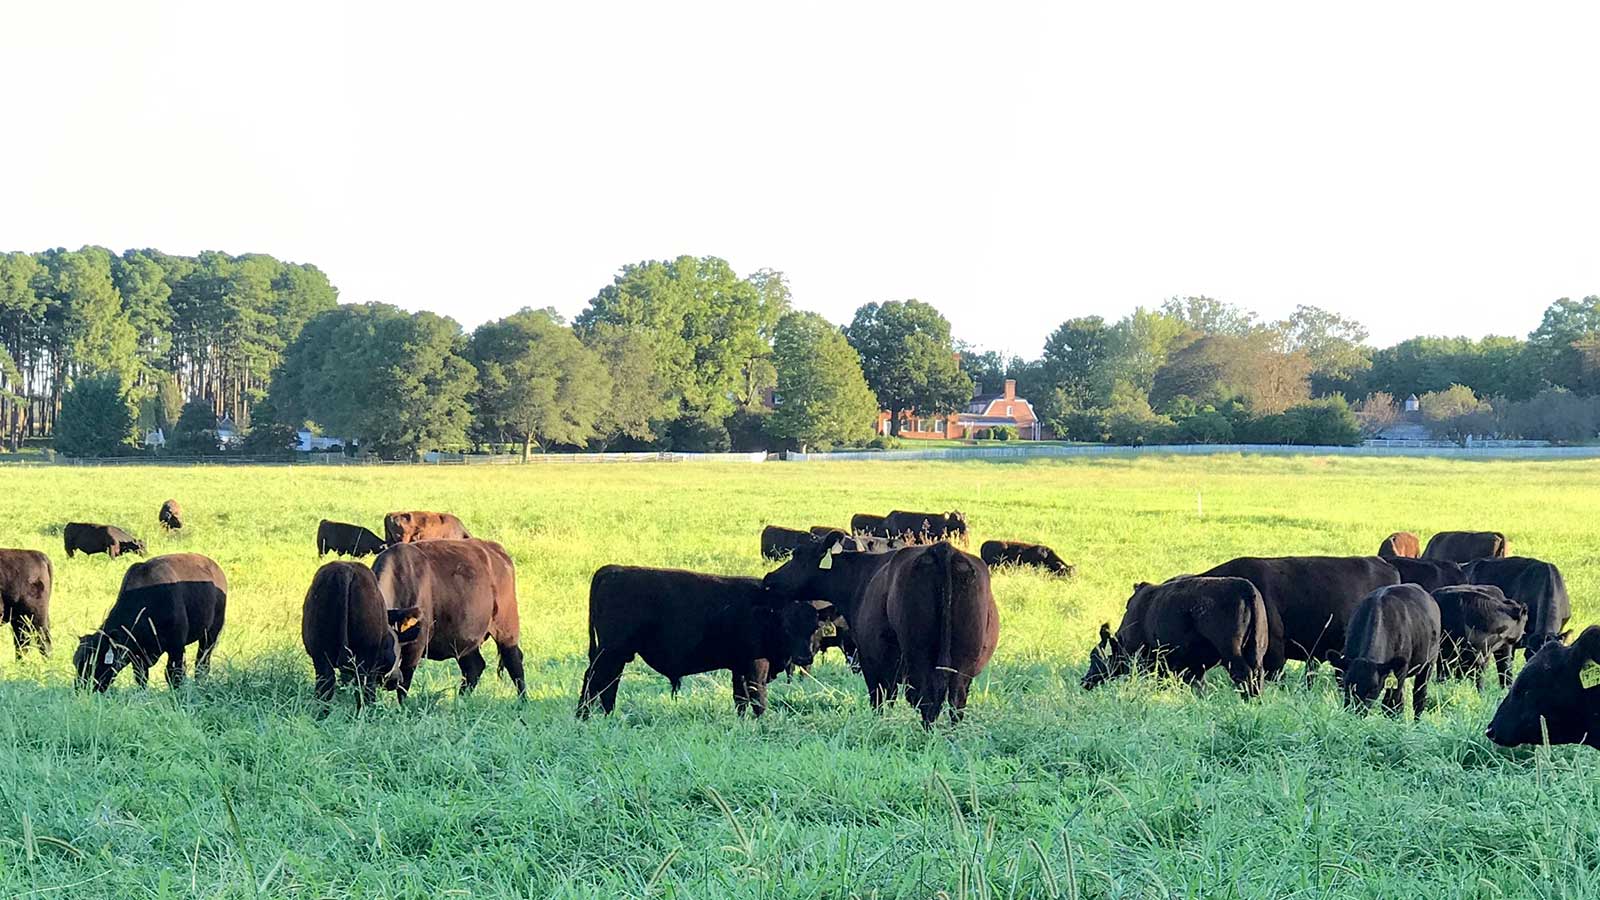 Field of calves